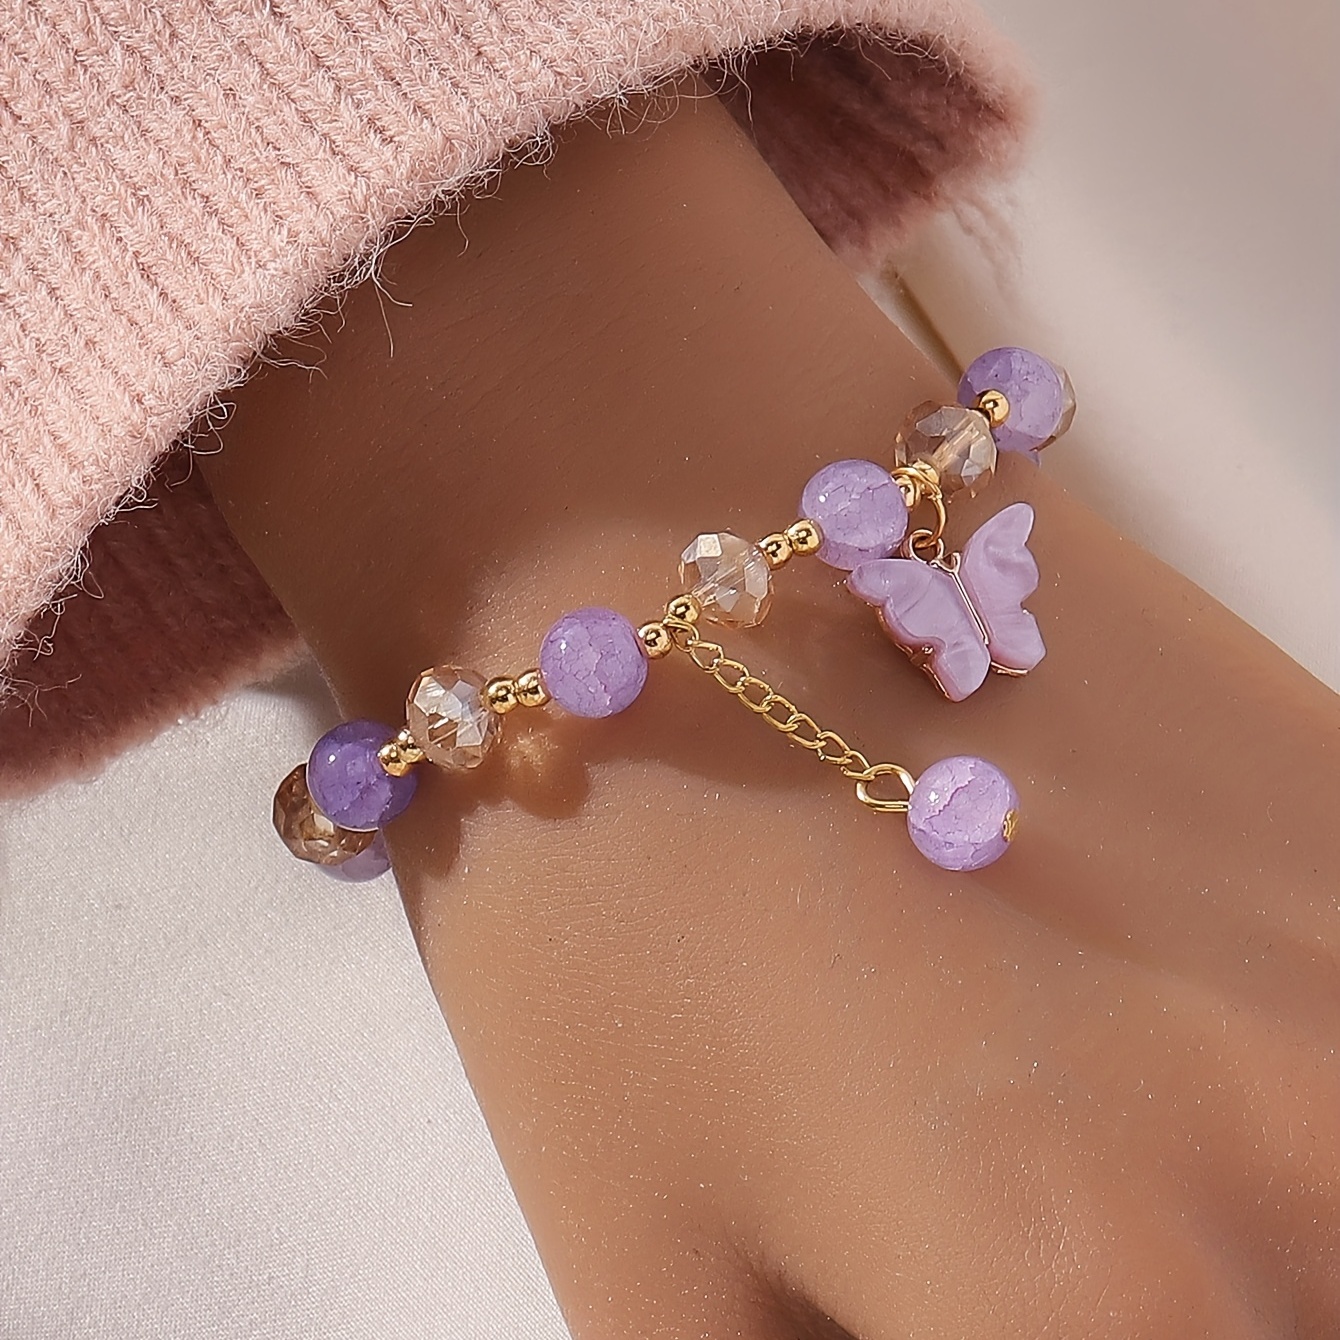 Cute Clear and Purple Friendship Bead Bracelet Customizable Y2k